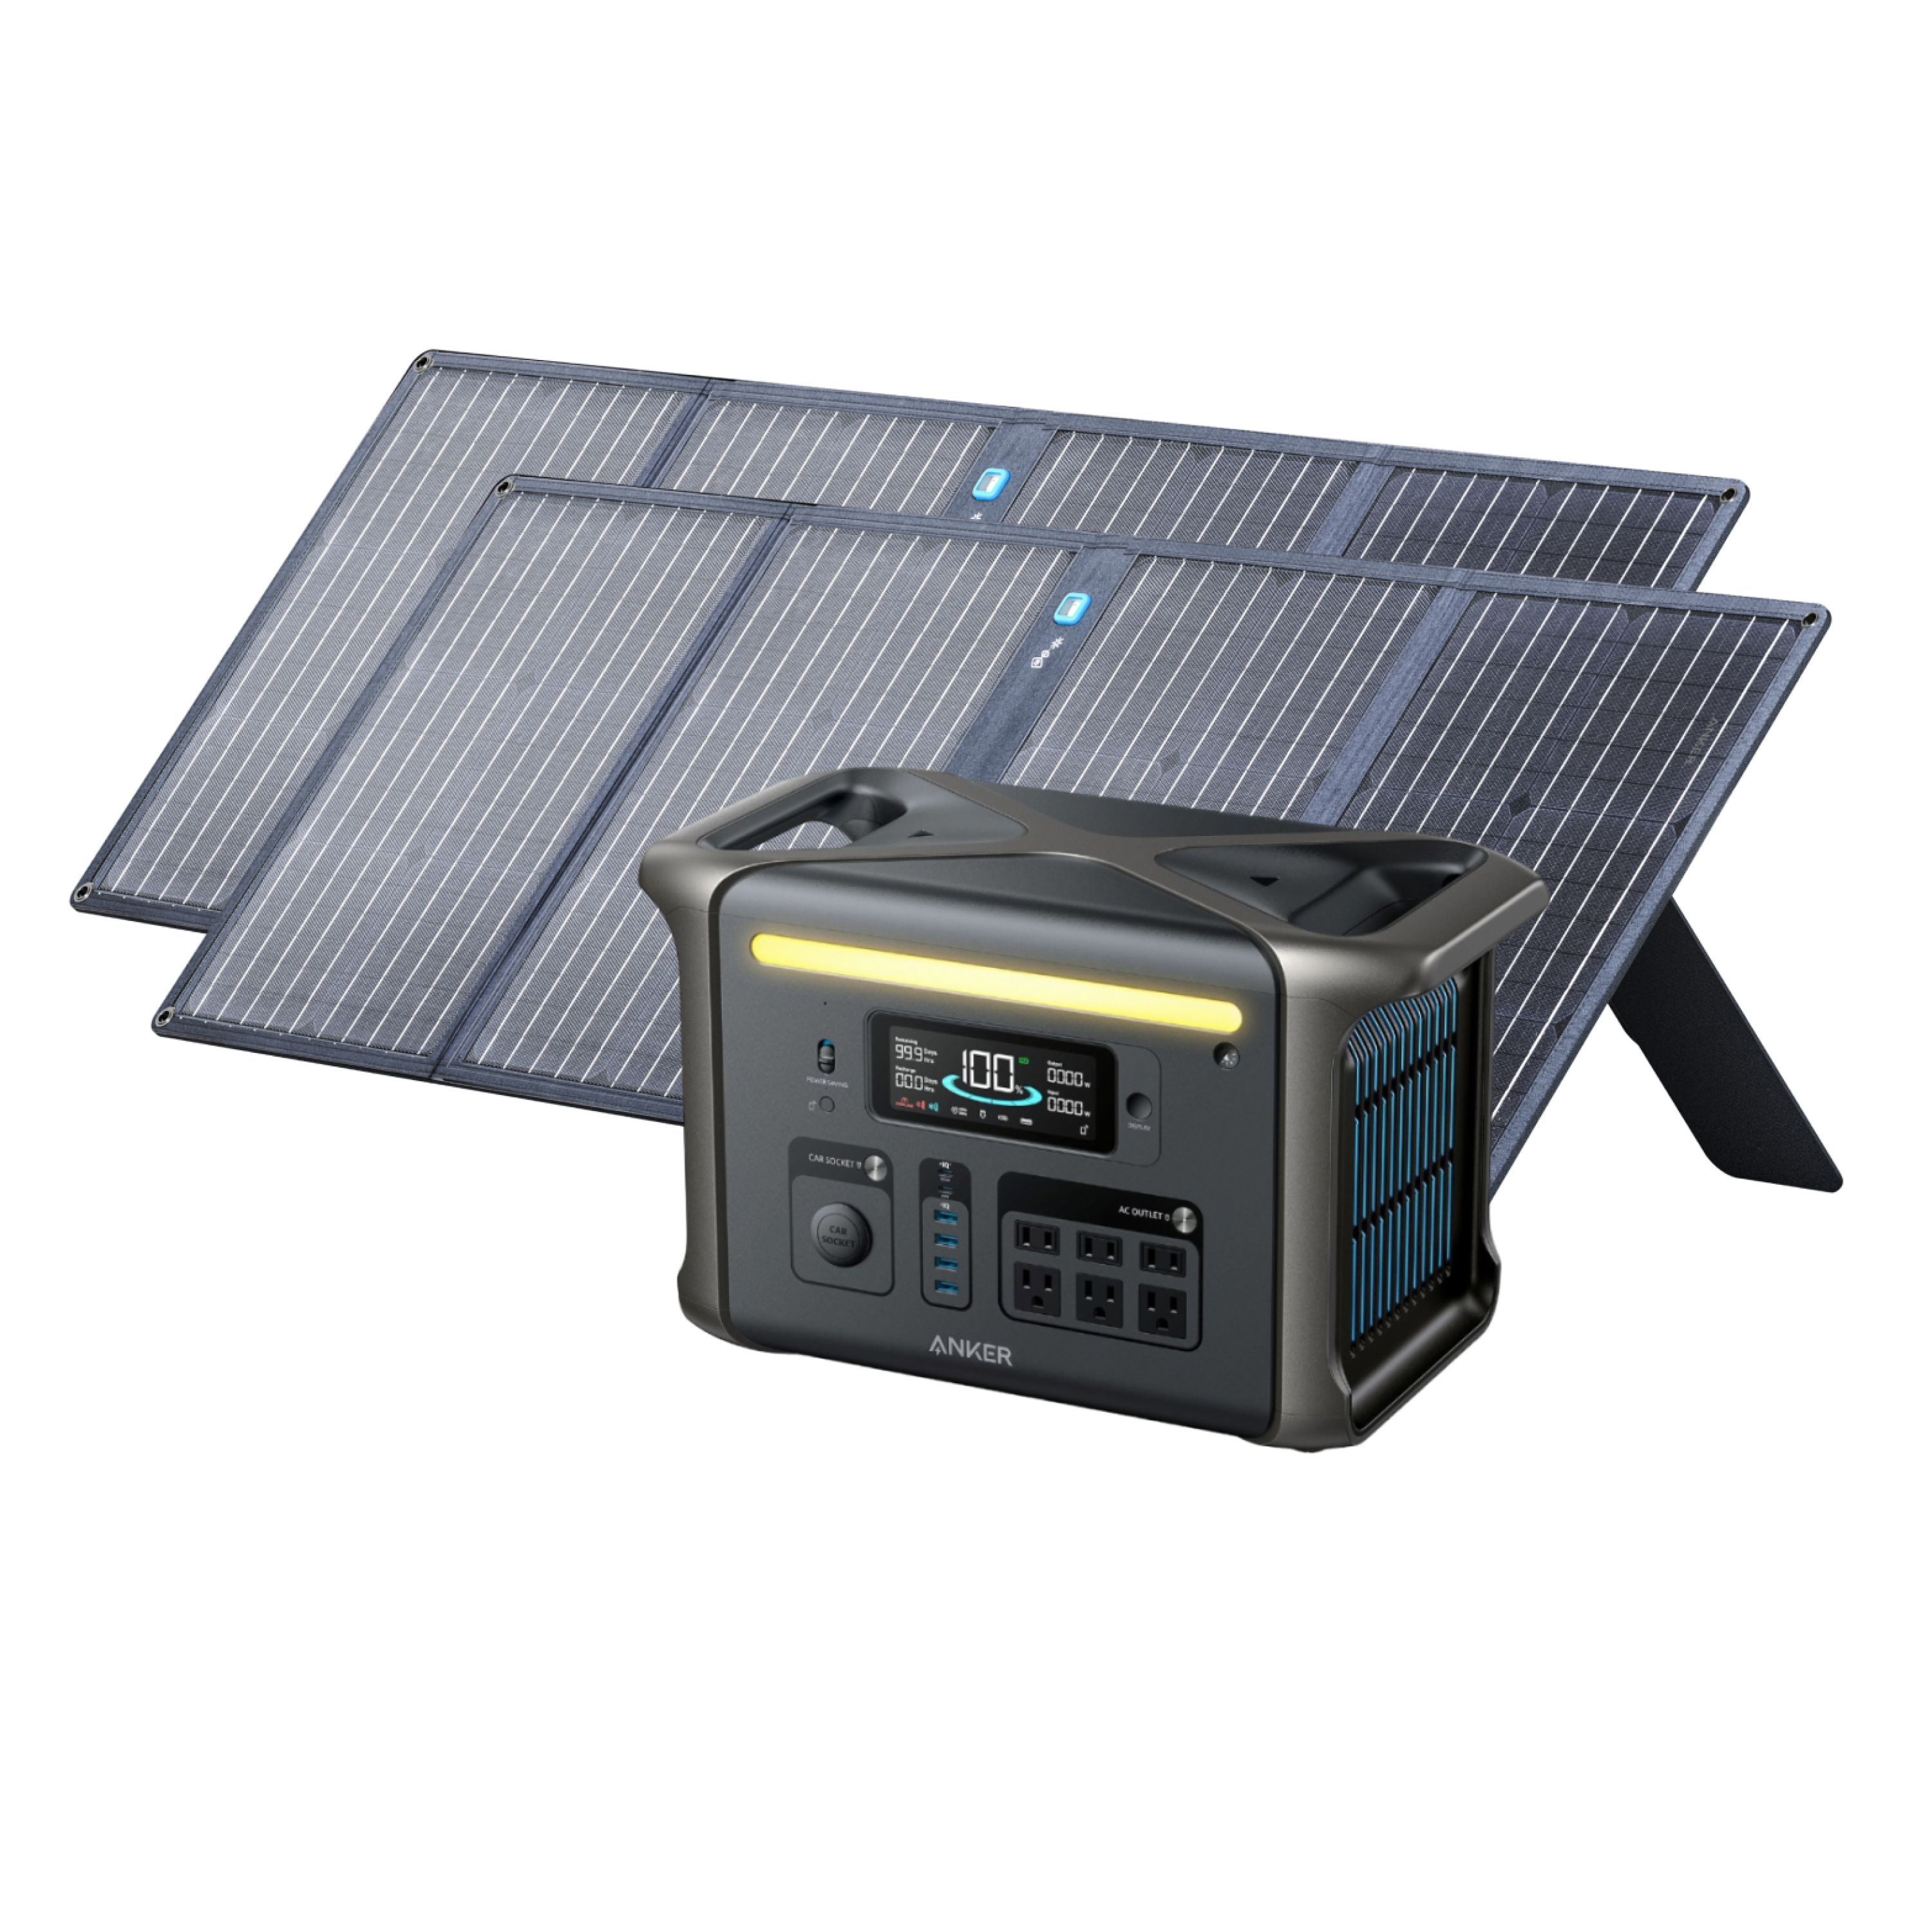 Anker SOLIX <b>F1500</b> Solar Generator + 2 x 100W Solar Panel